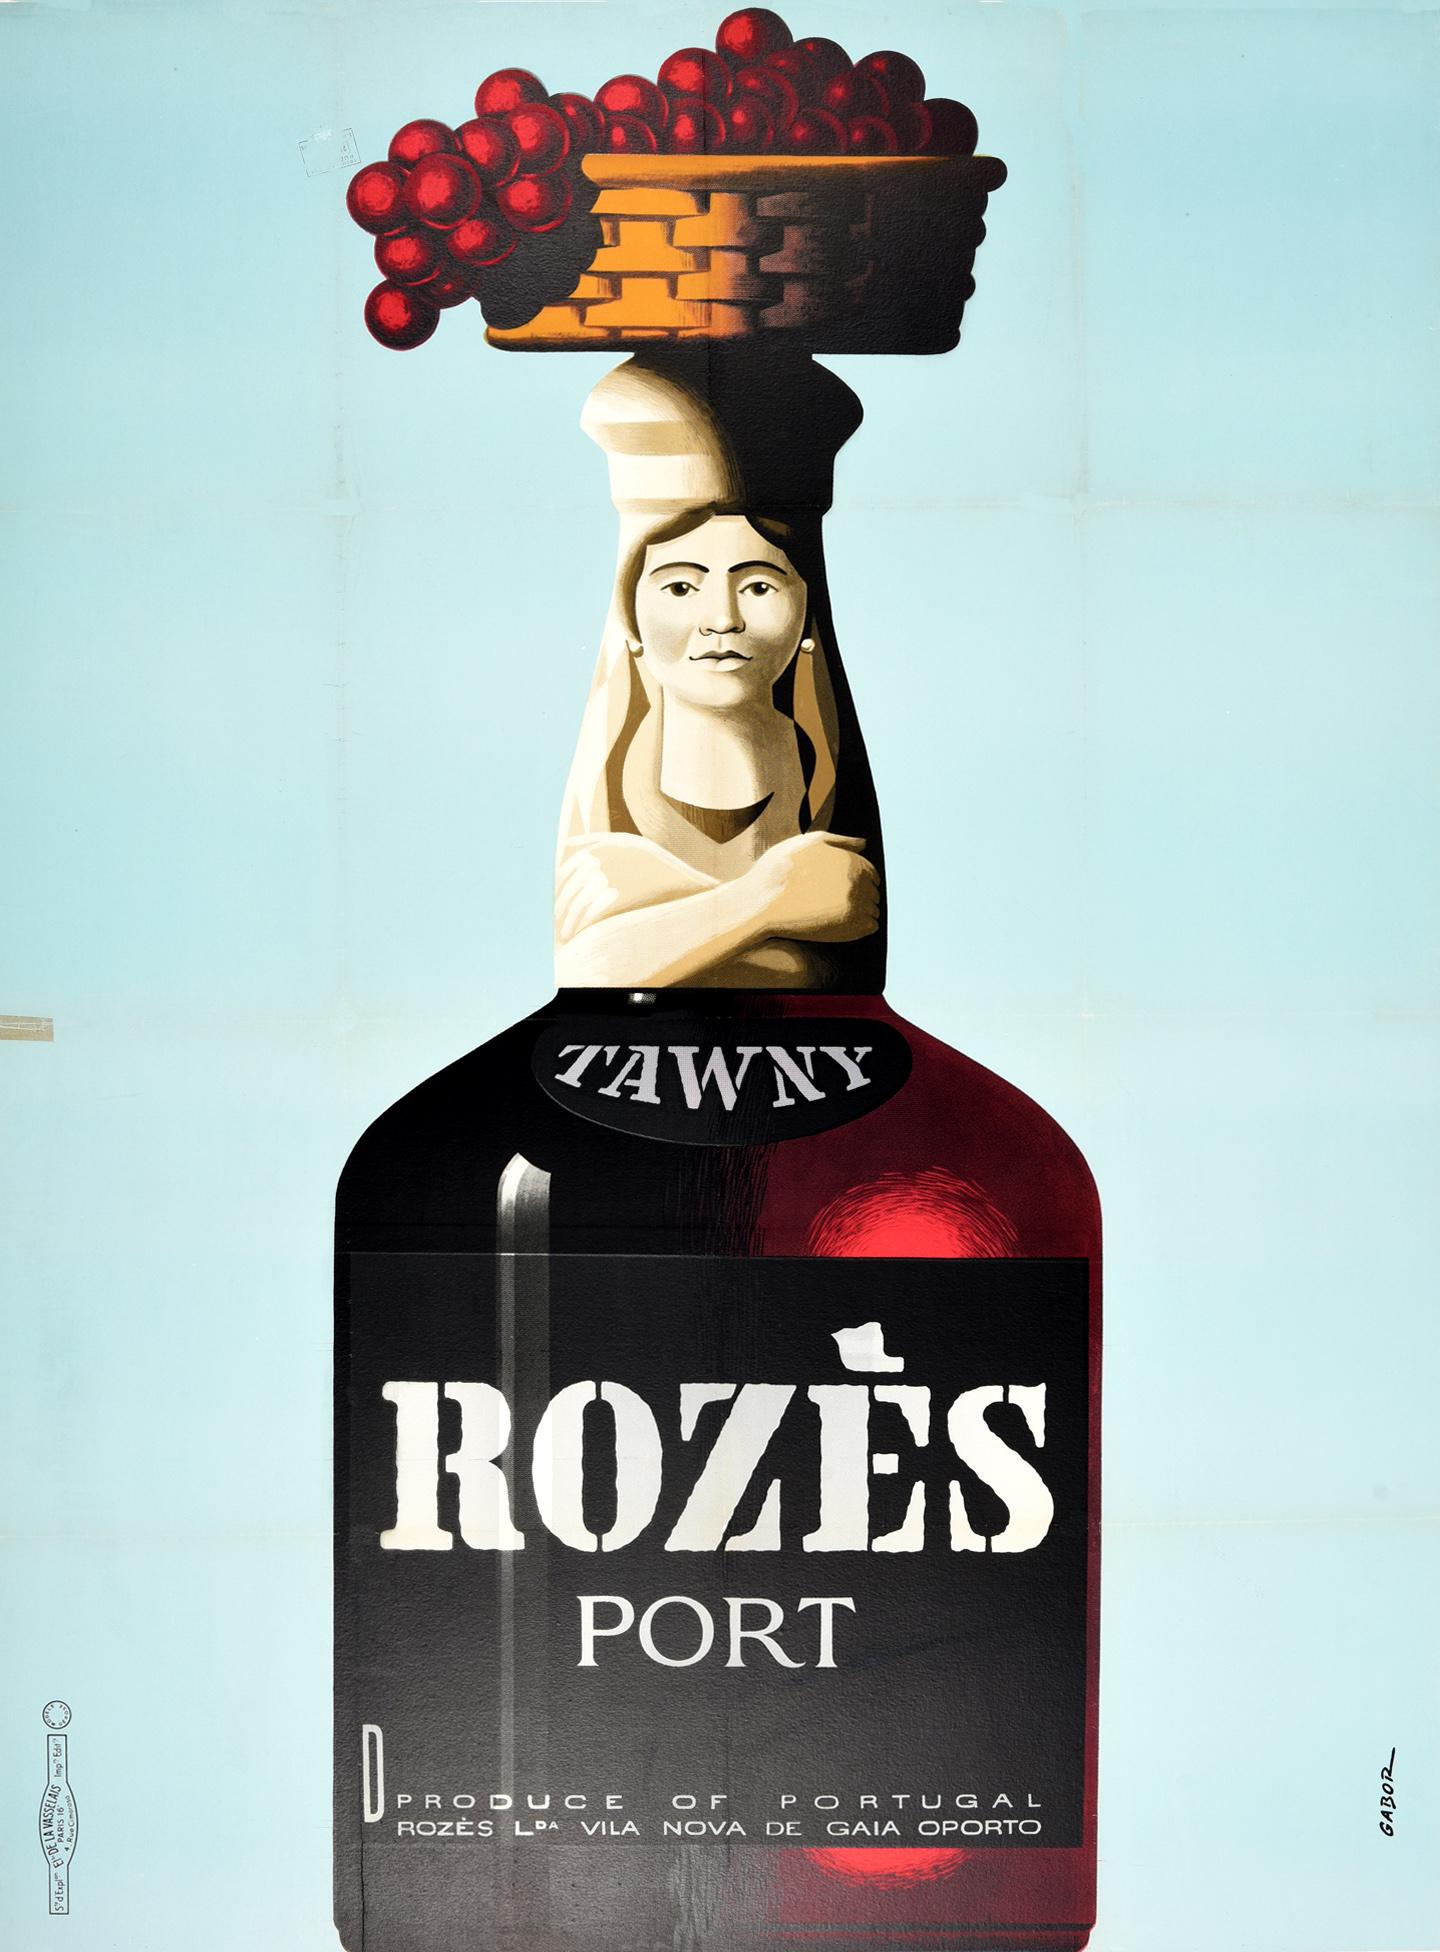 Gabor Print - Original Vintage Drink Advertising Poster Tawny Rozes Port Wine Portugal Oporto